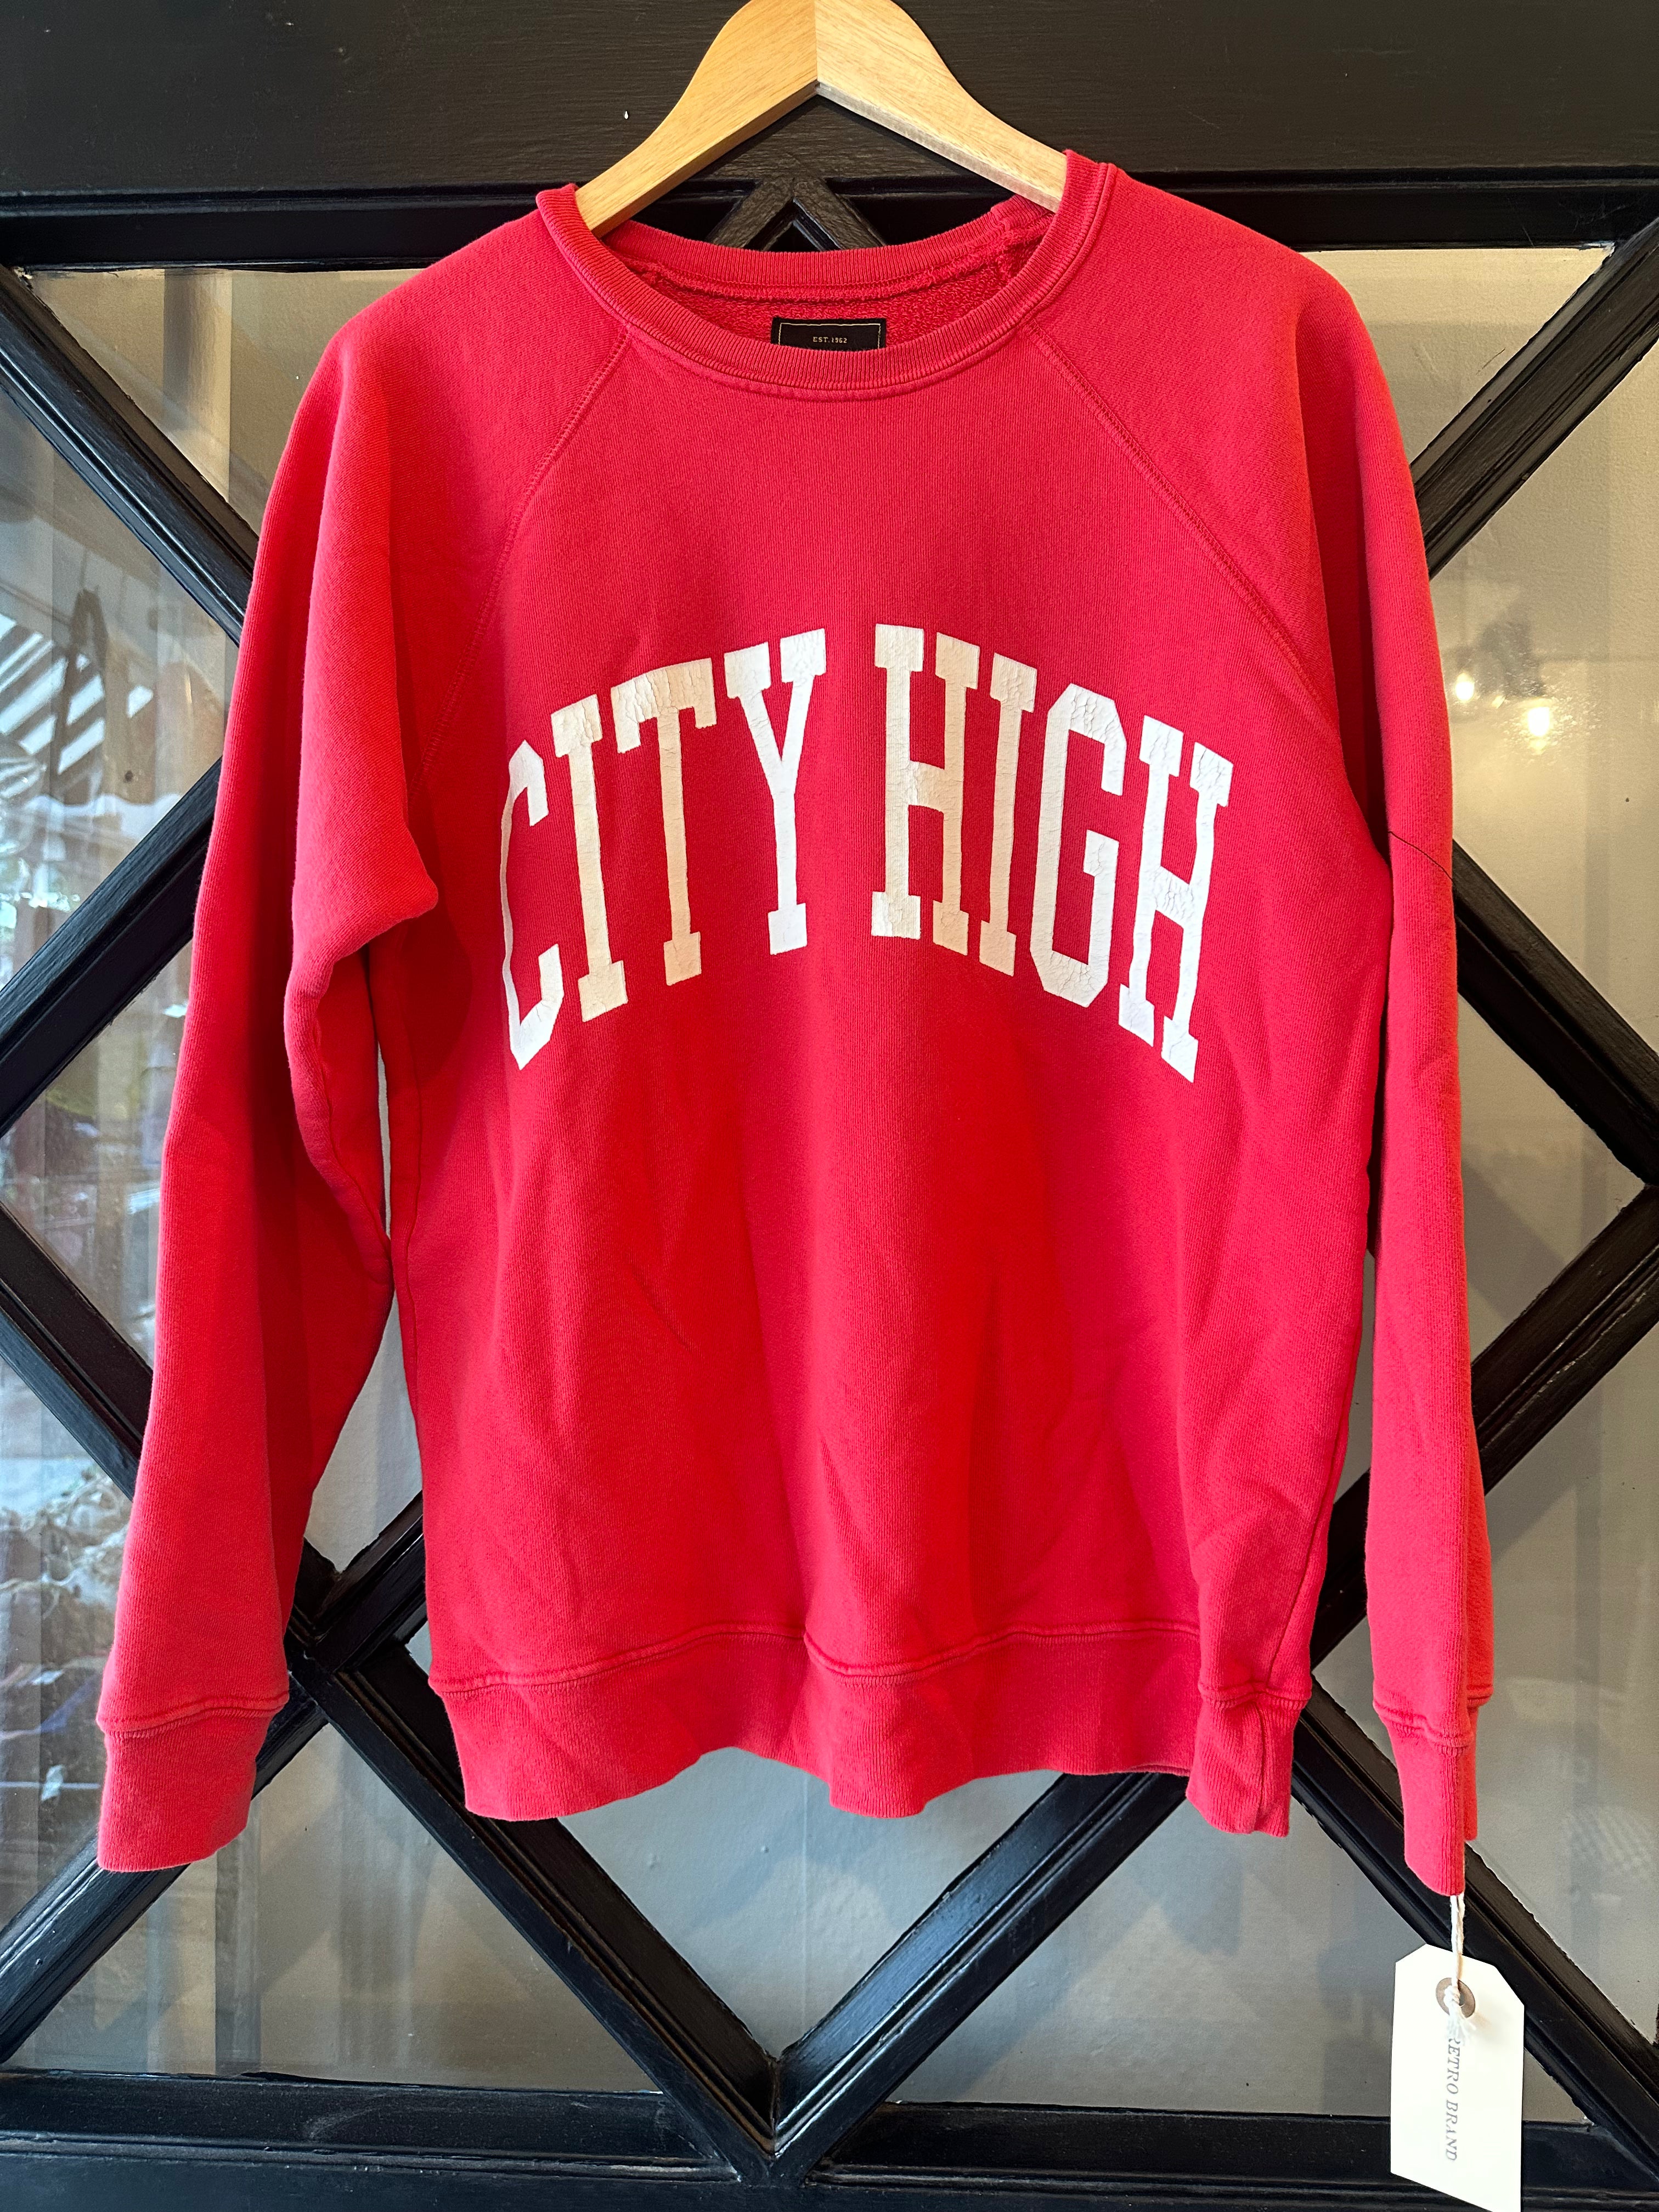 Retro Brand Unisex Vintage City High Sweatshirt